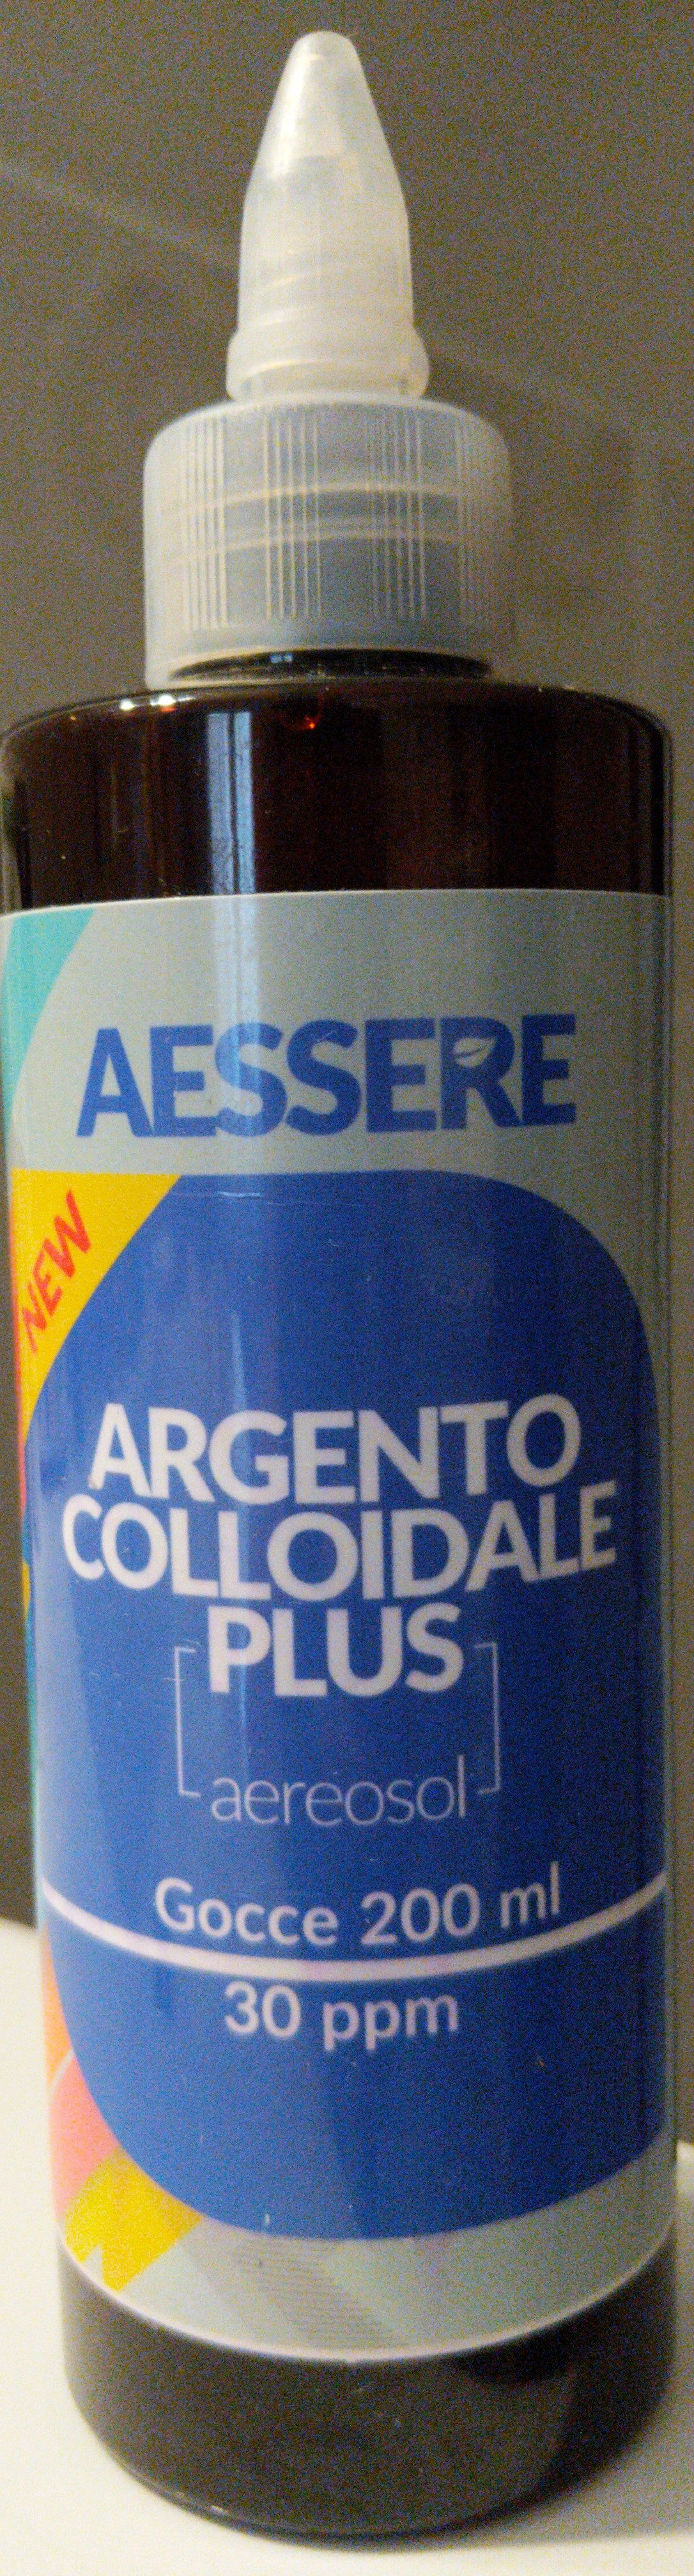 Argento Colloidale Plus aerosol - Produto - it